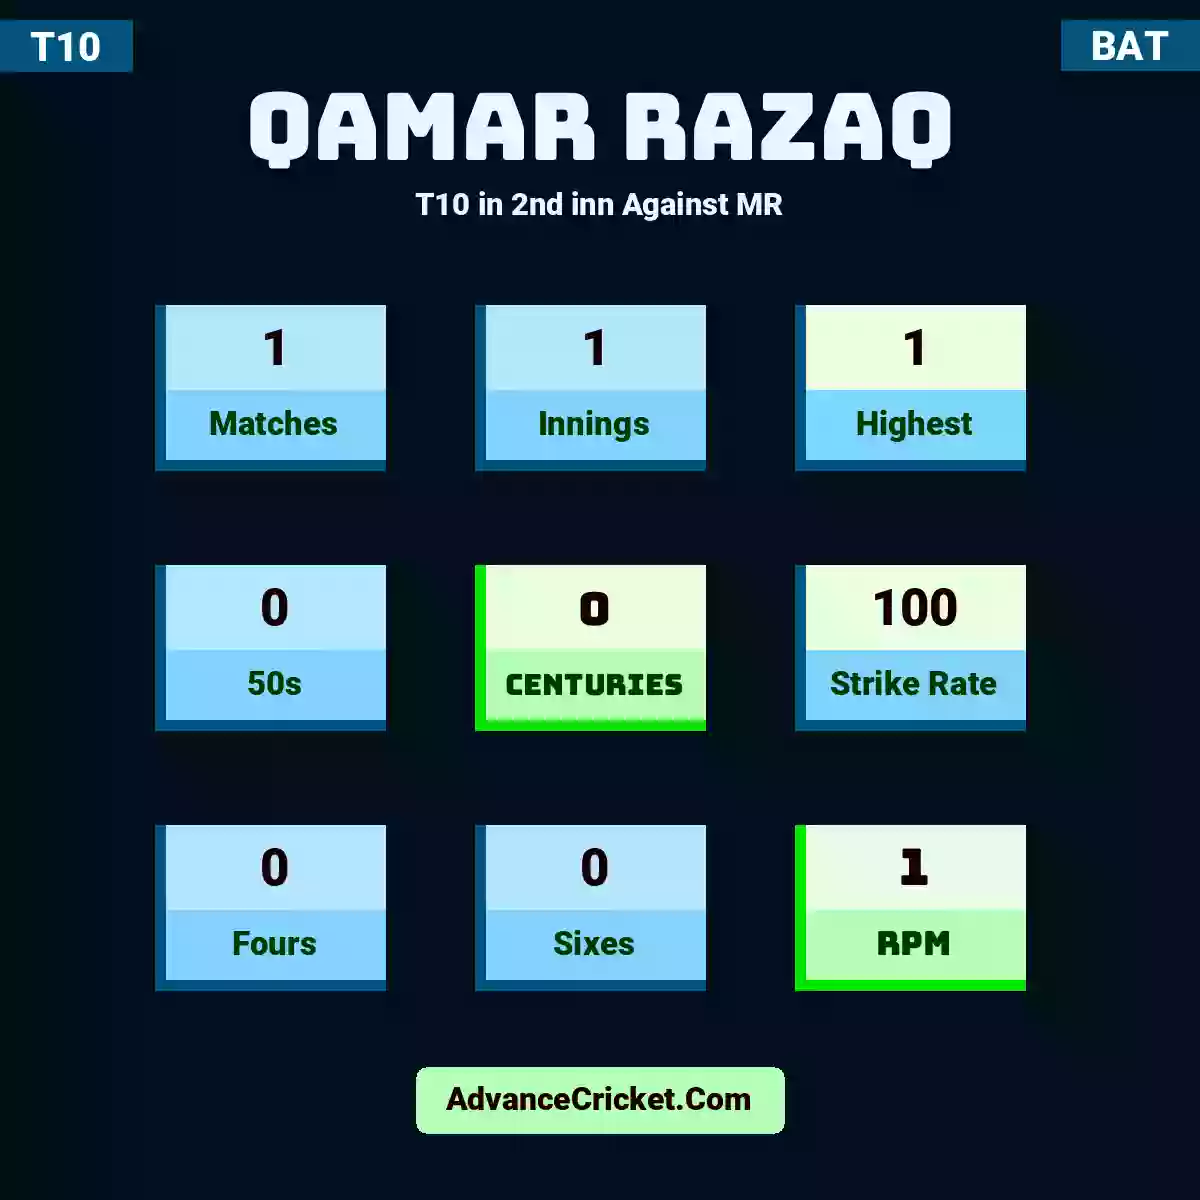 Qamar Razaq T10  in 2nd inn Against MR, Qamar Razaq played 1 matches, scored 1 runs as highest, 0 half-centuries, and 0 centuries, with a strike rate of 100. Q.Razaq hit 0 fours and 0 sixes, with an RPM of 1.